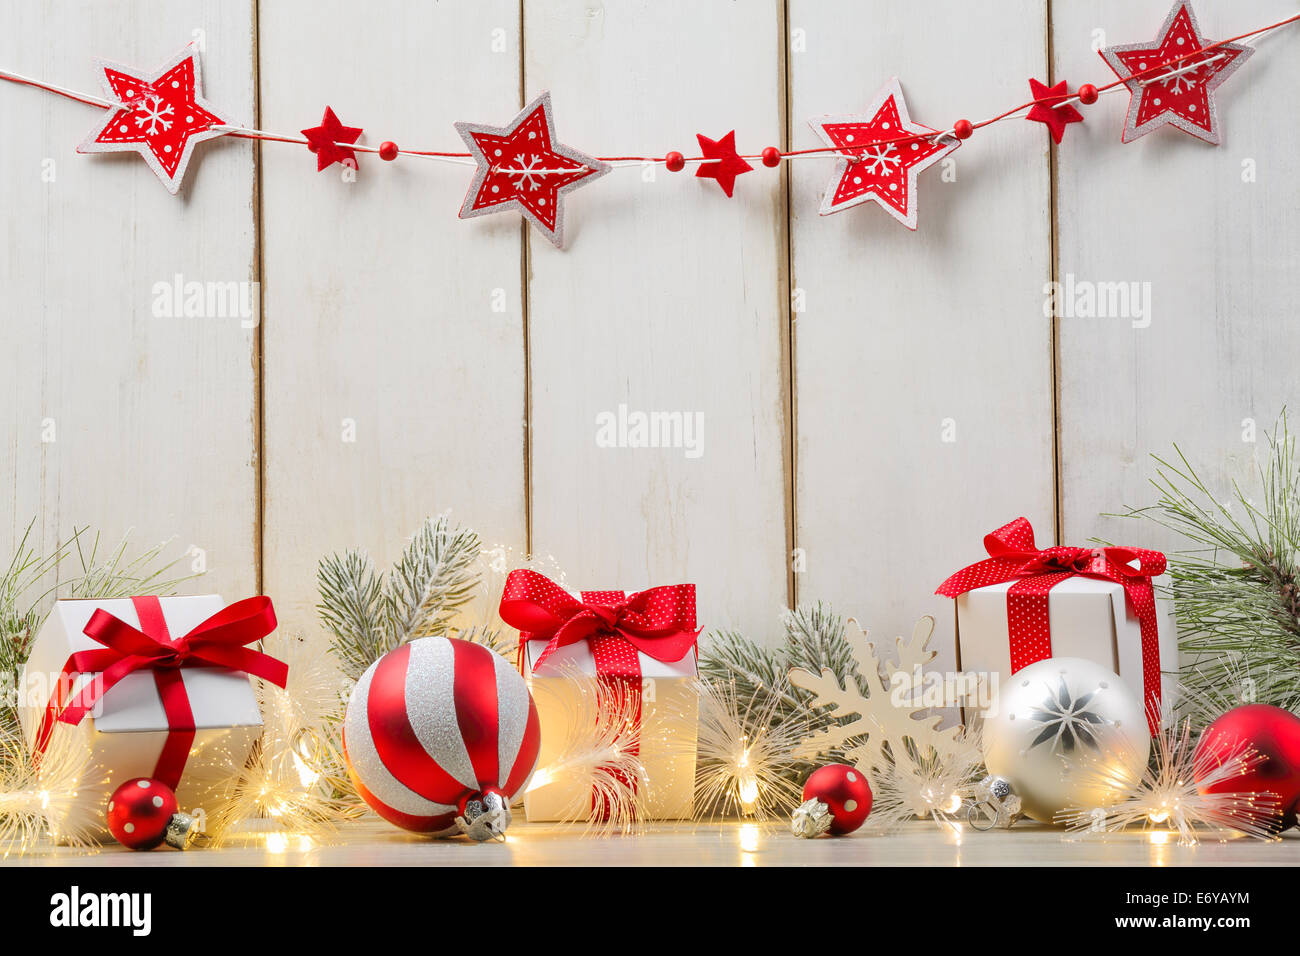 Christmas ball,gifts,fir branch and lights on wood plank. Stock Photo